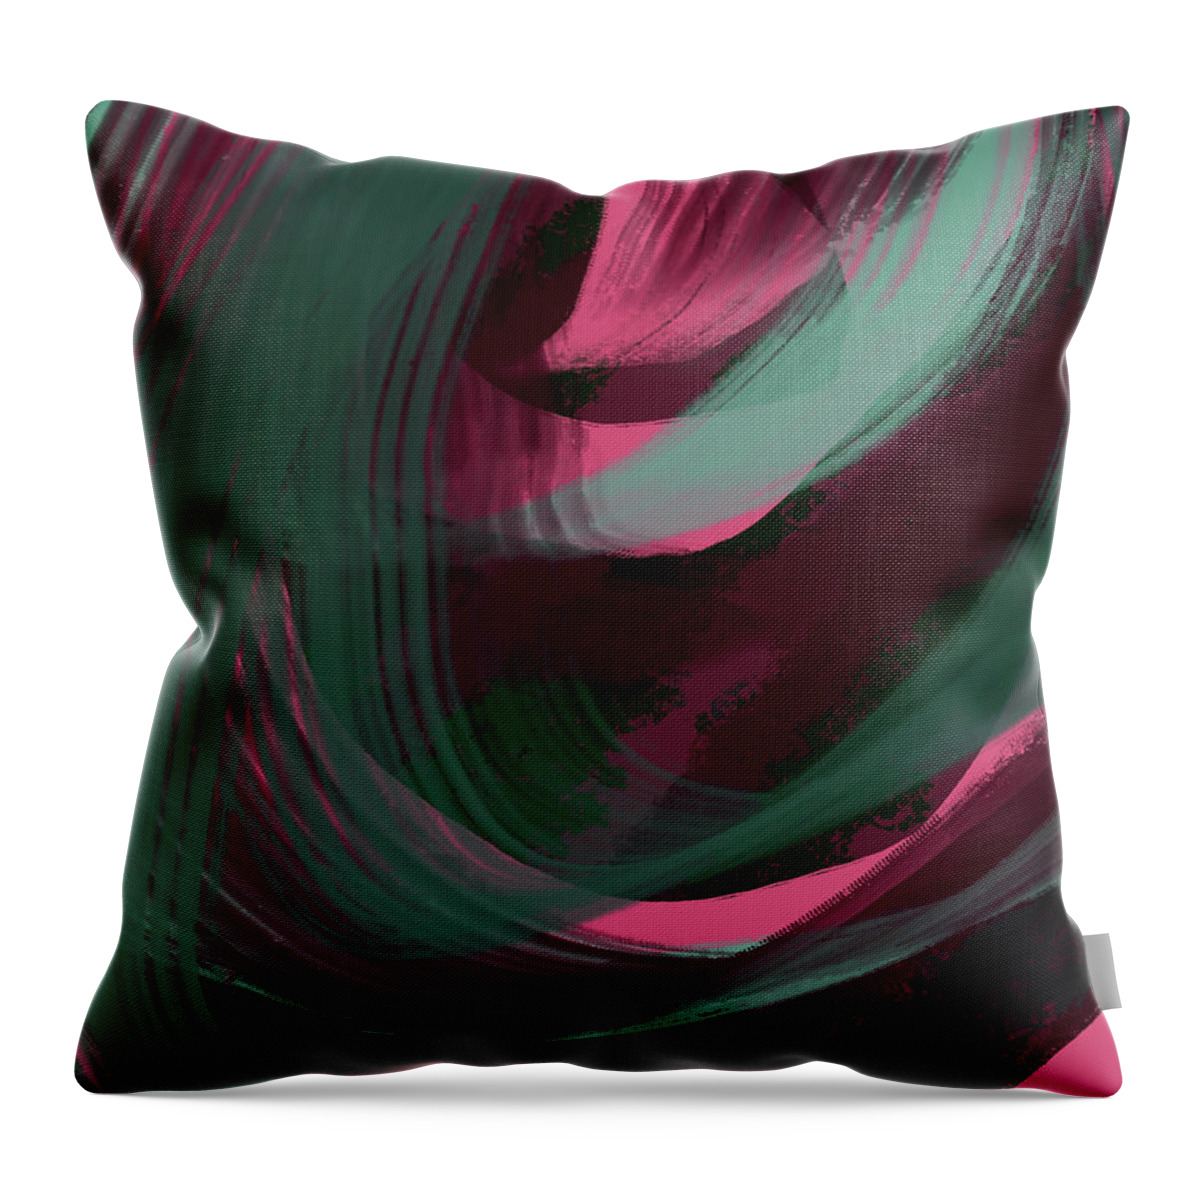  Throw Pillow featuring the digital art Christmas Swirls by Michelle Hoffmann